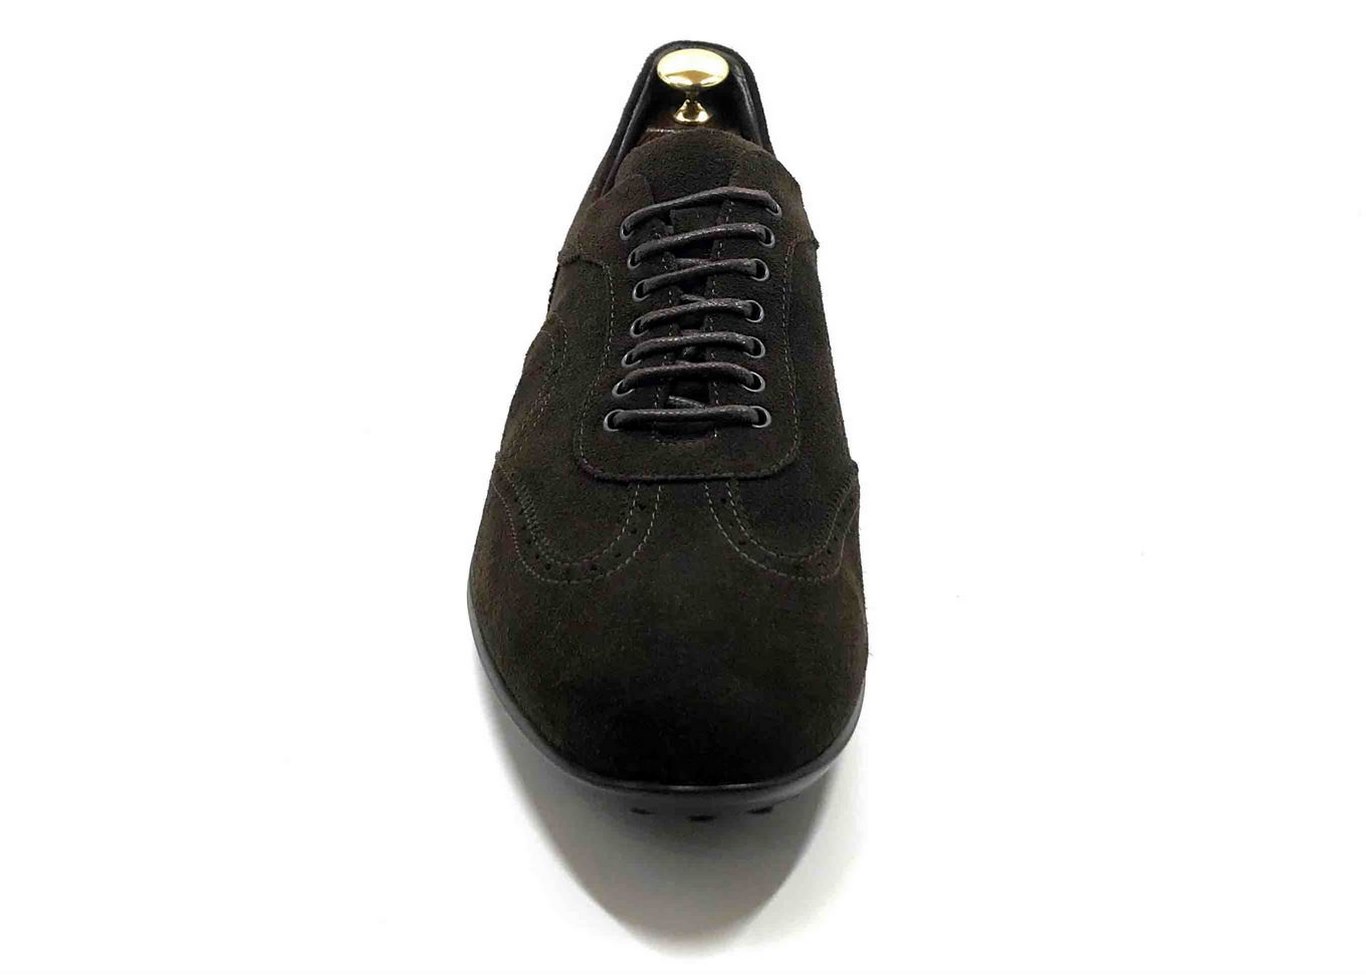 Smart Sneaker in dark Brown suede with extractable innersole